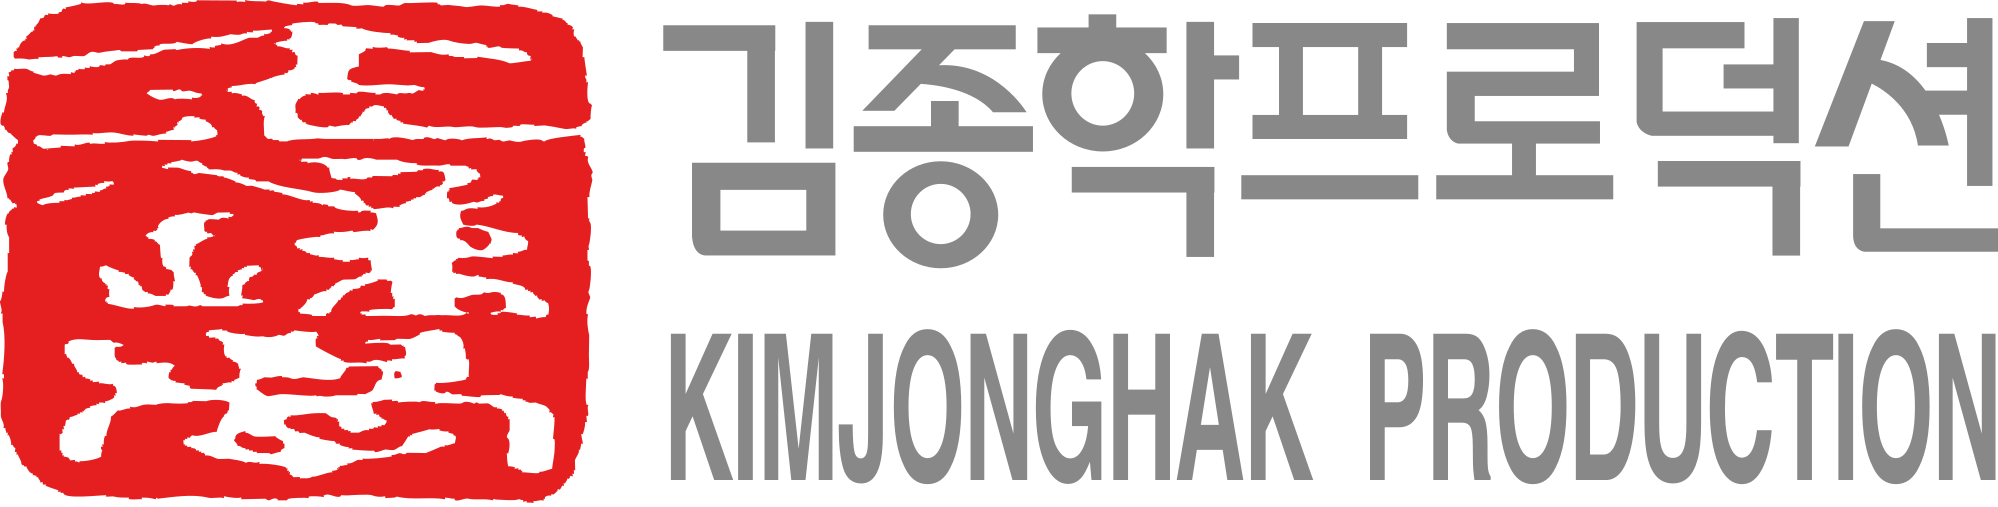 Kim Jong-hak Production - company